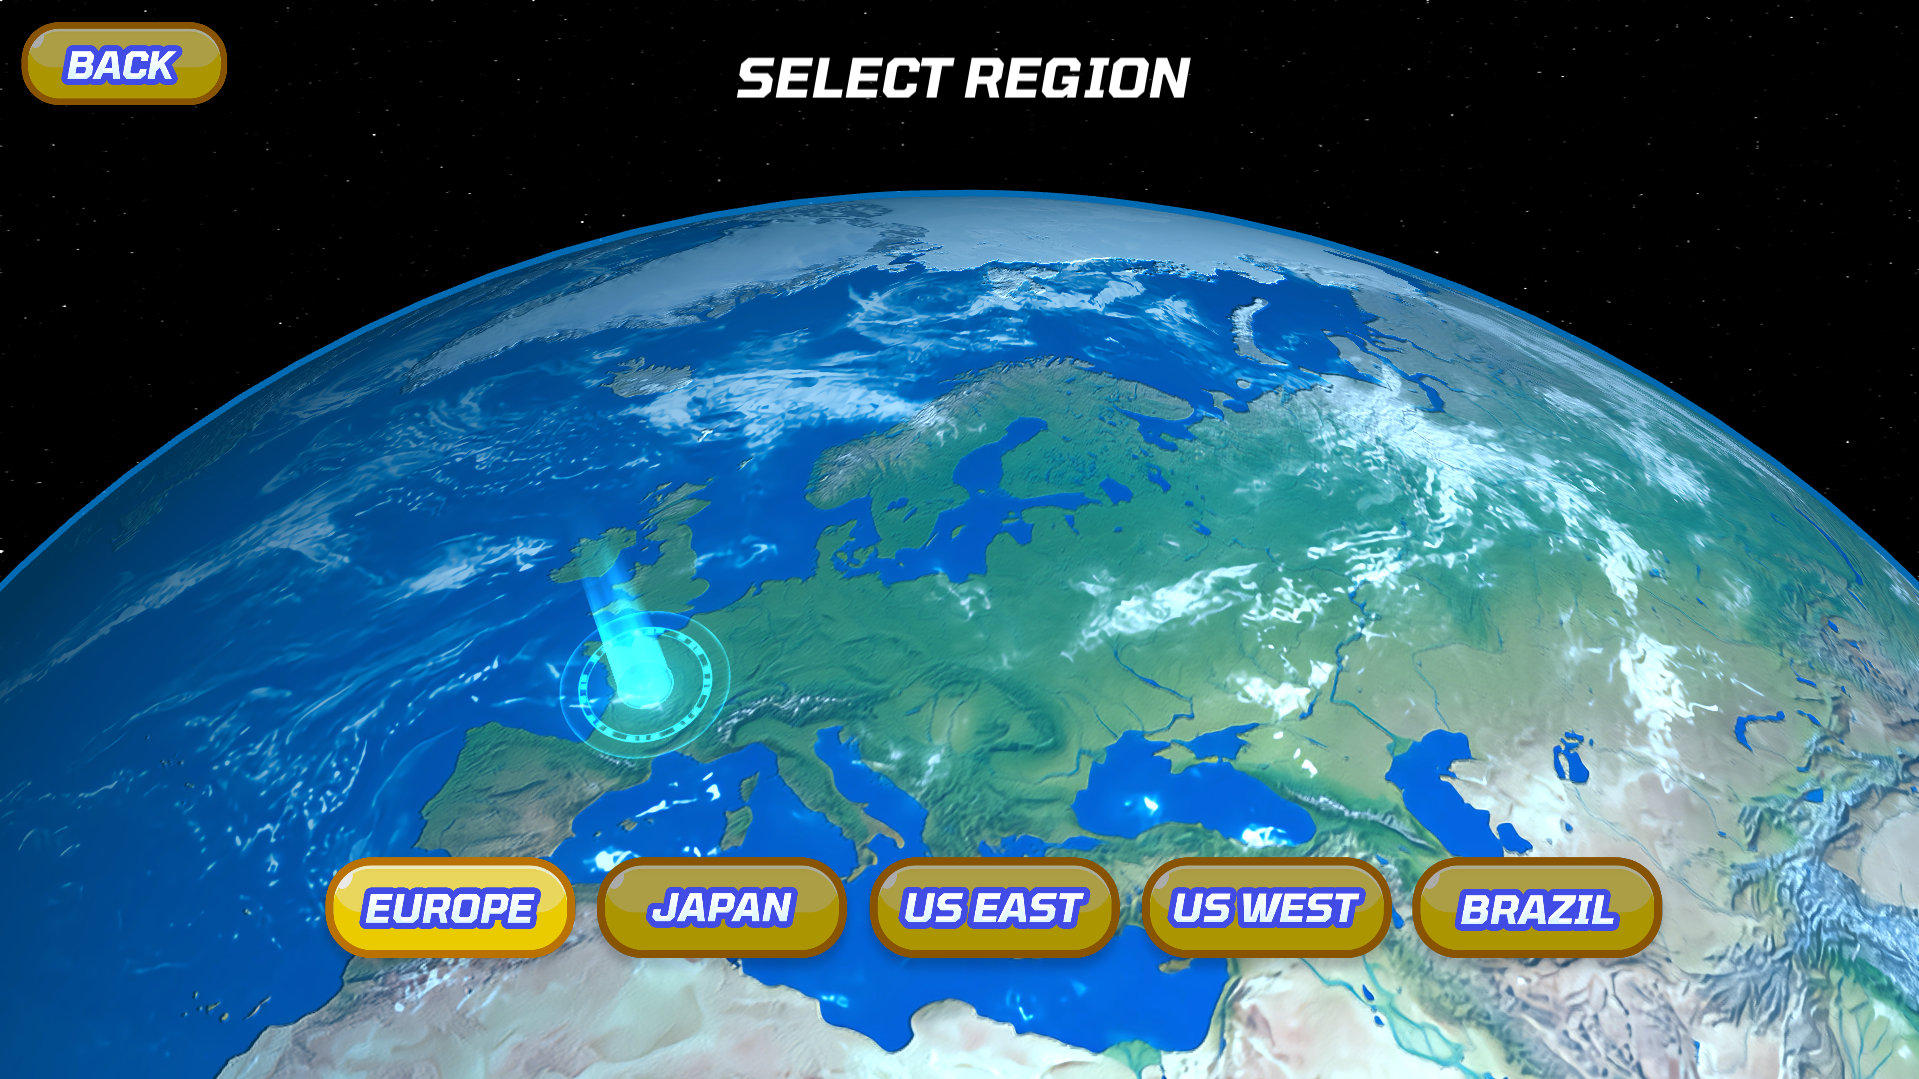 Select a region to play ZEBEDEE Kart